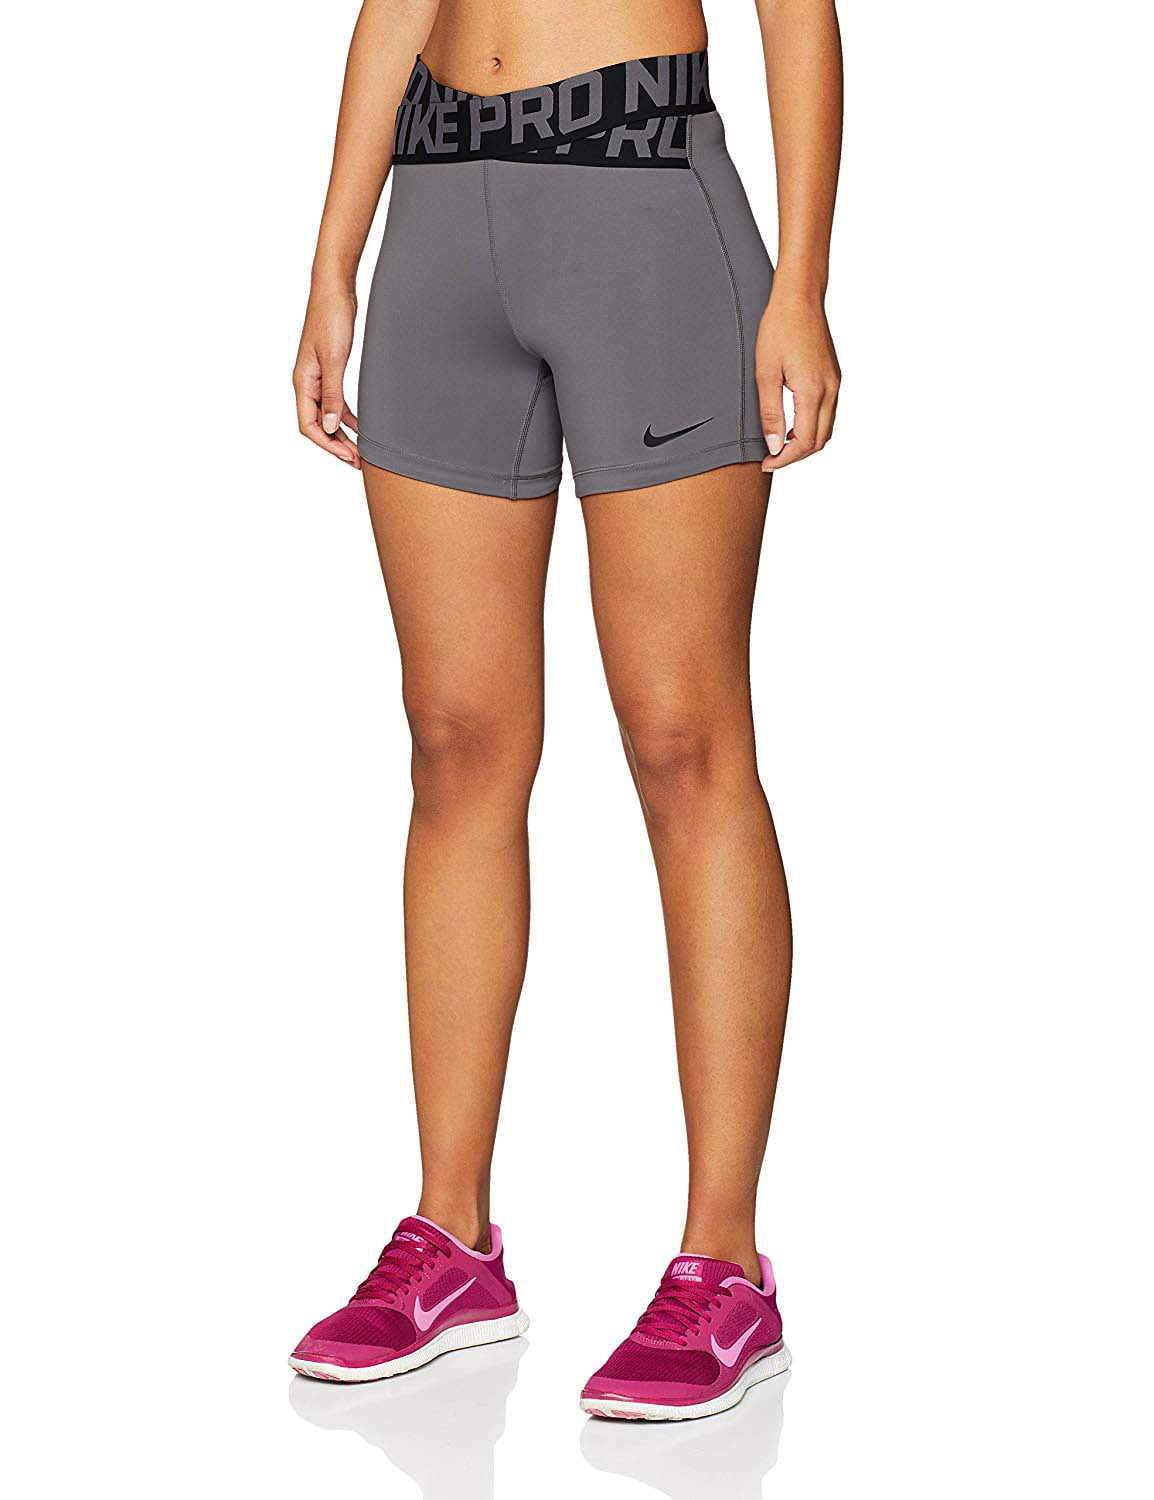 Nike Women's Pro Intertwist Training Shorts (Large, Gunsmoke) - Walmart.com